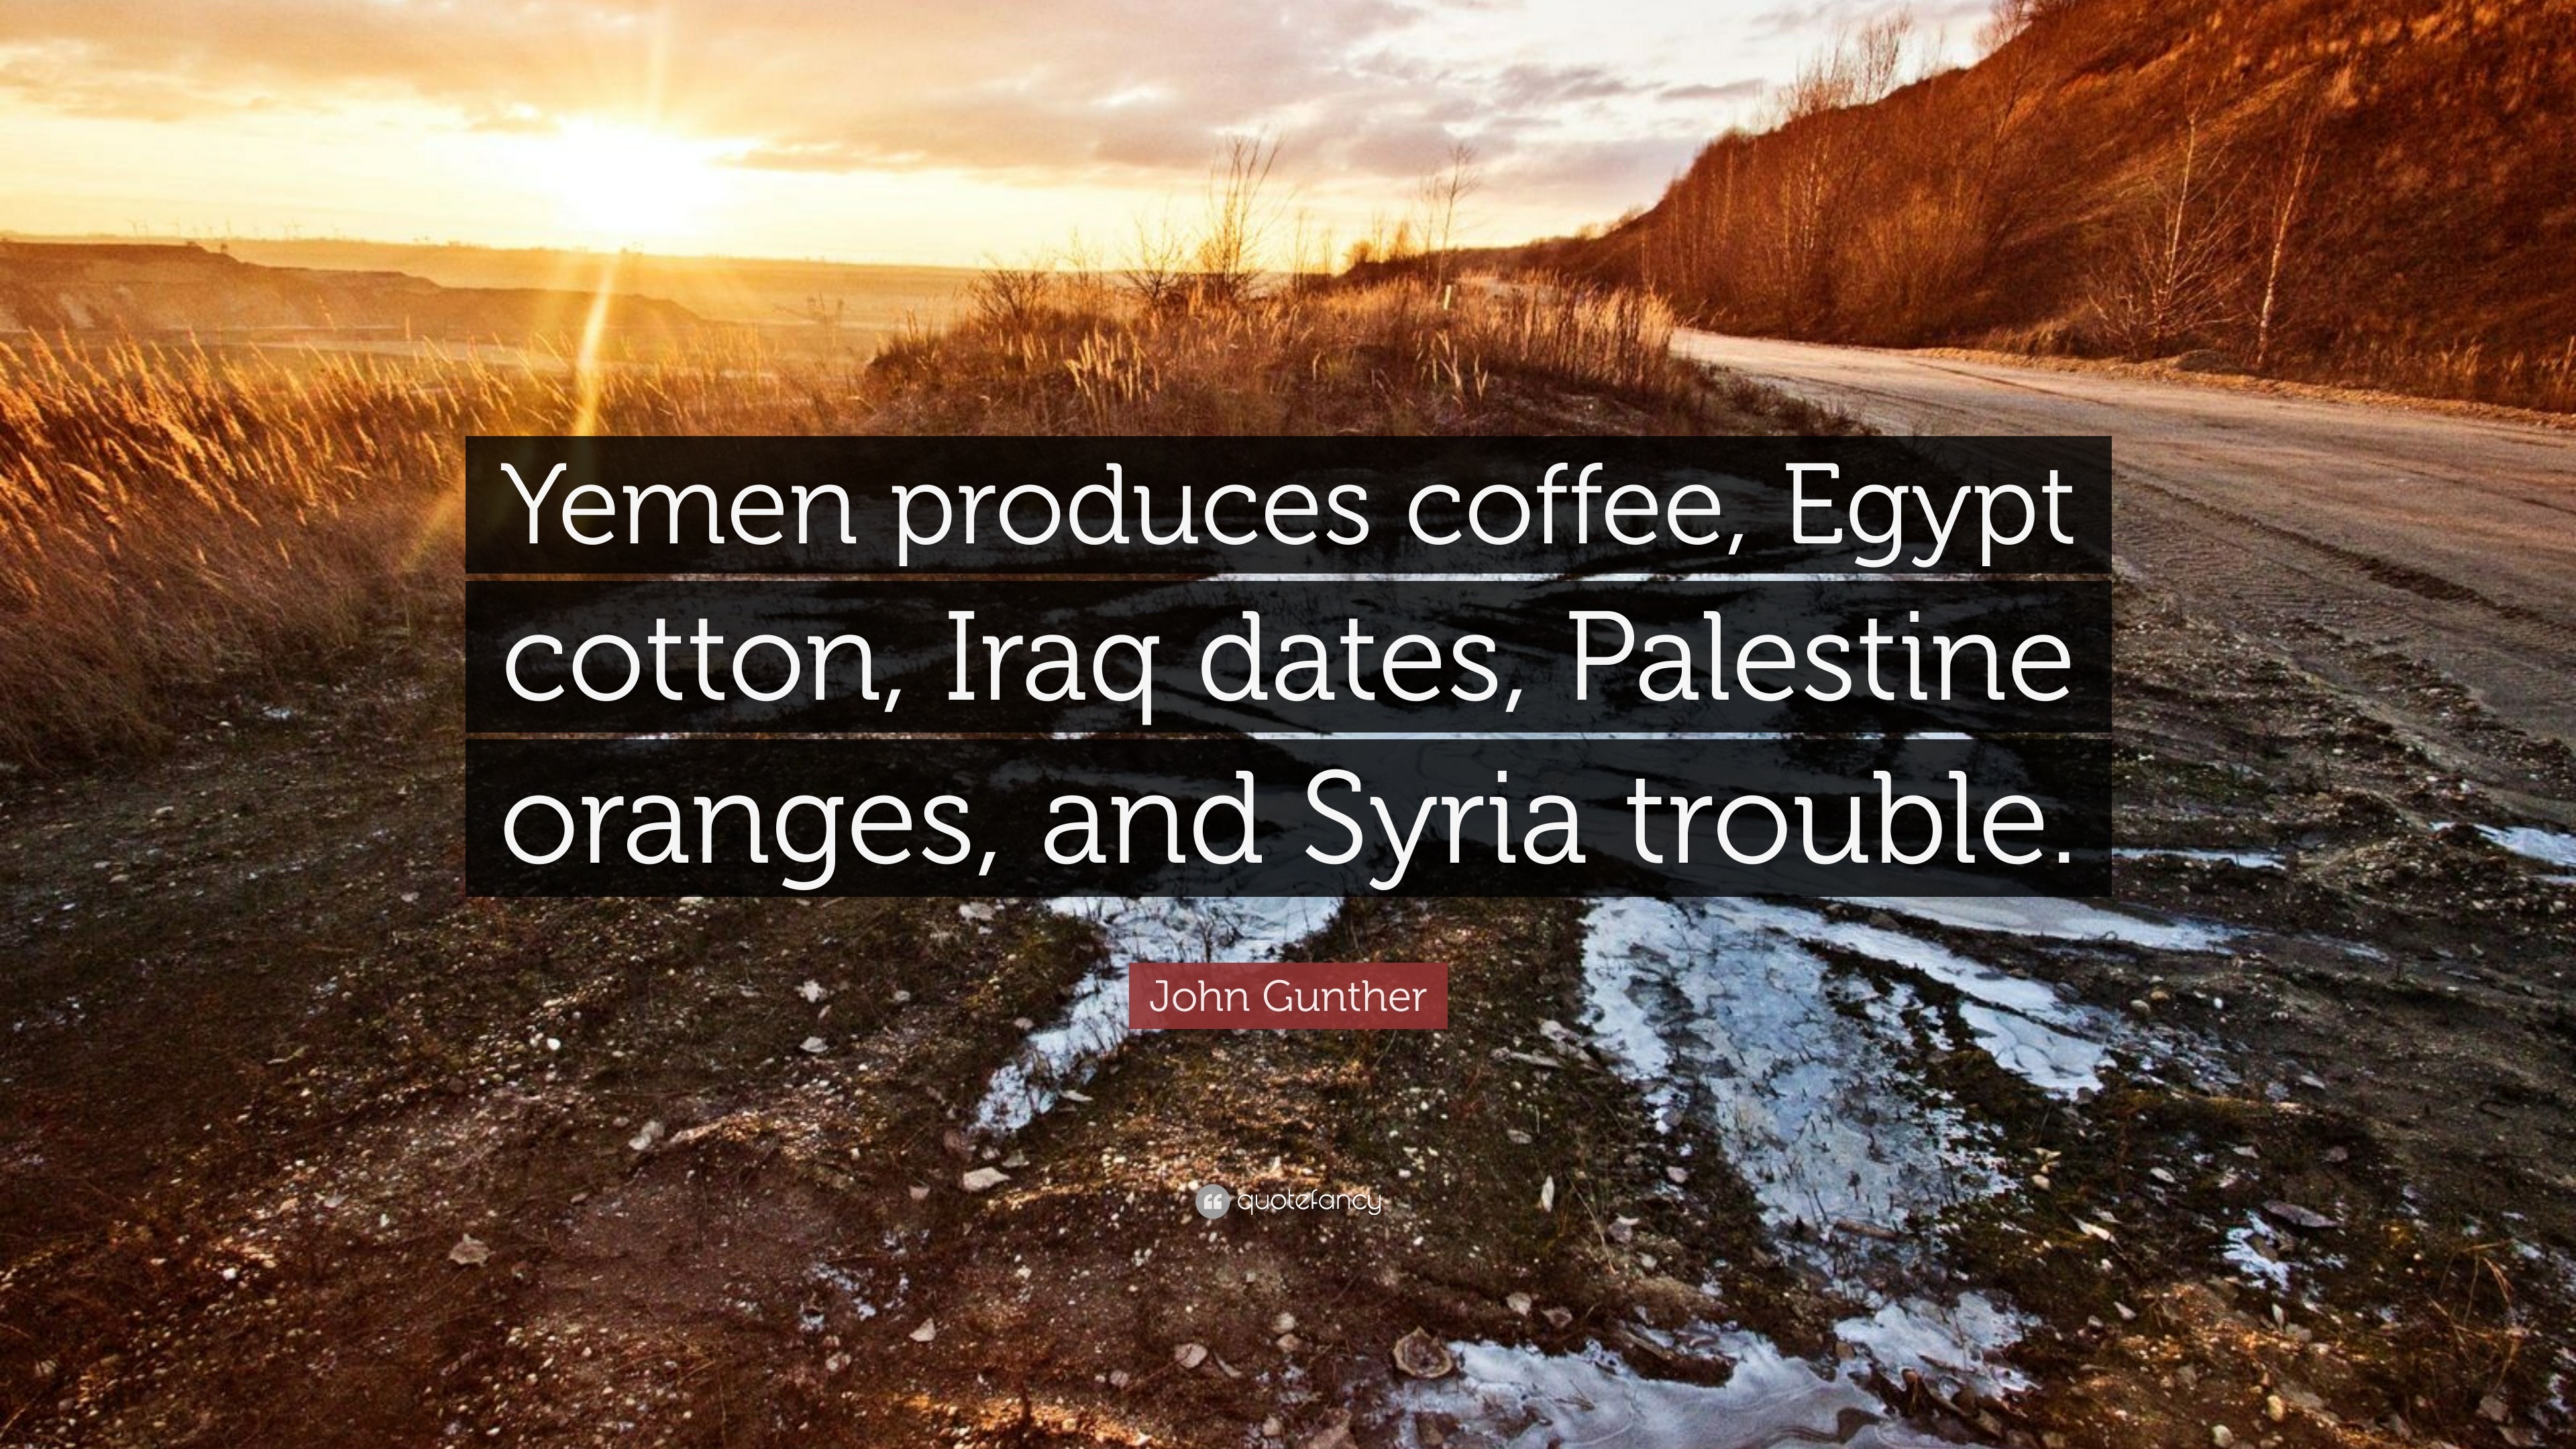 3840x2160 John Gunther Quote: “Yemen produces coffee, Egypt cotton, Iraq dates,  Palestine